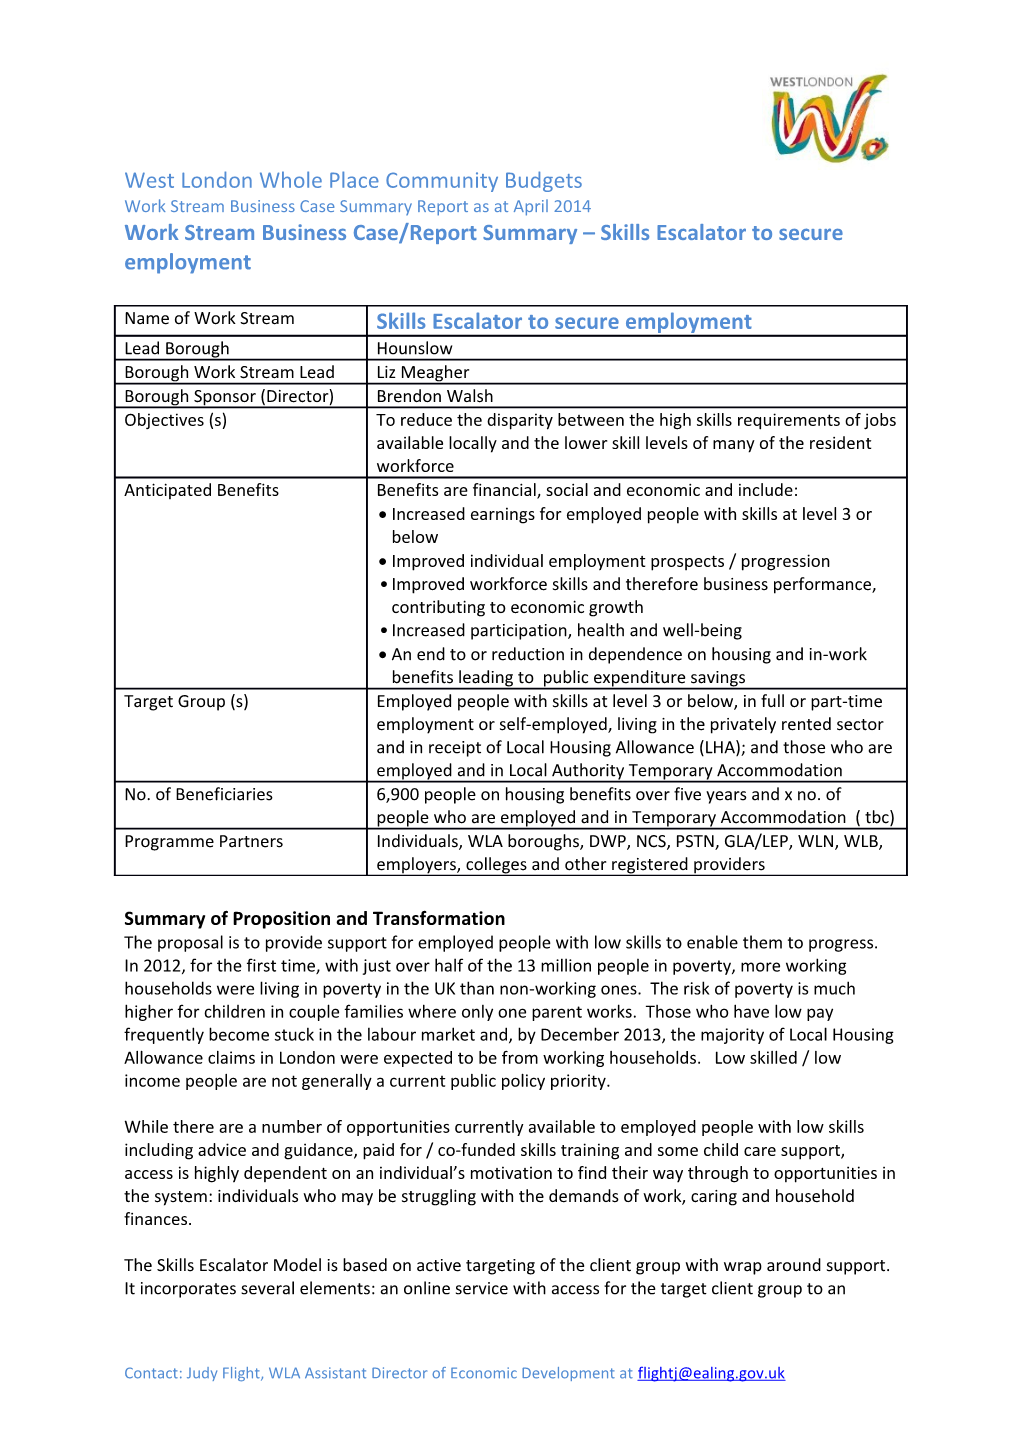 Work Stream Business Case/Report Summary Skills Escalator to Secure Employment